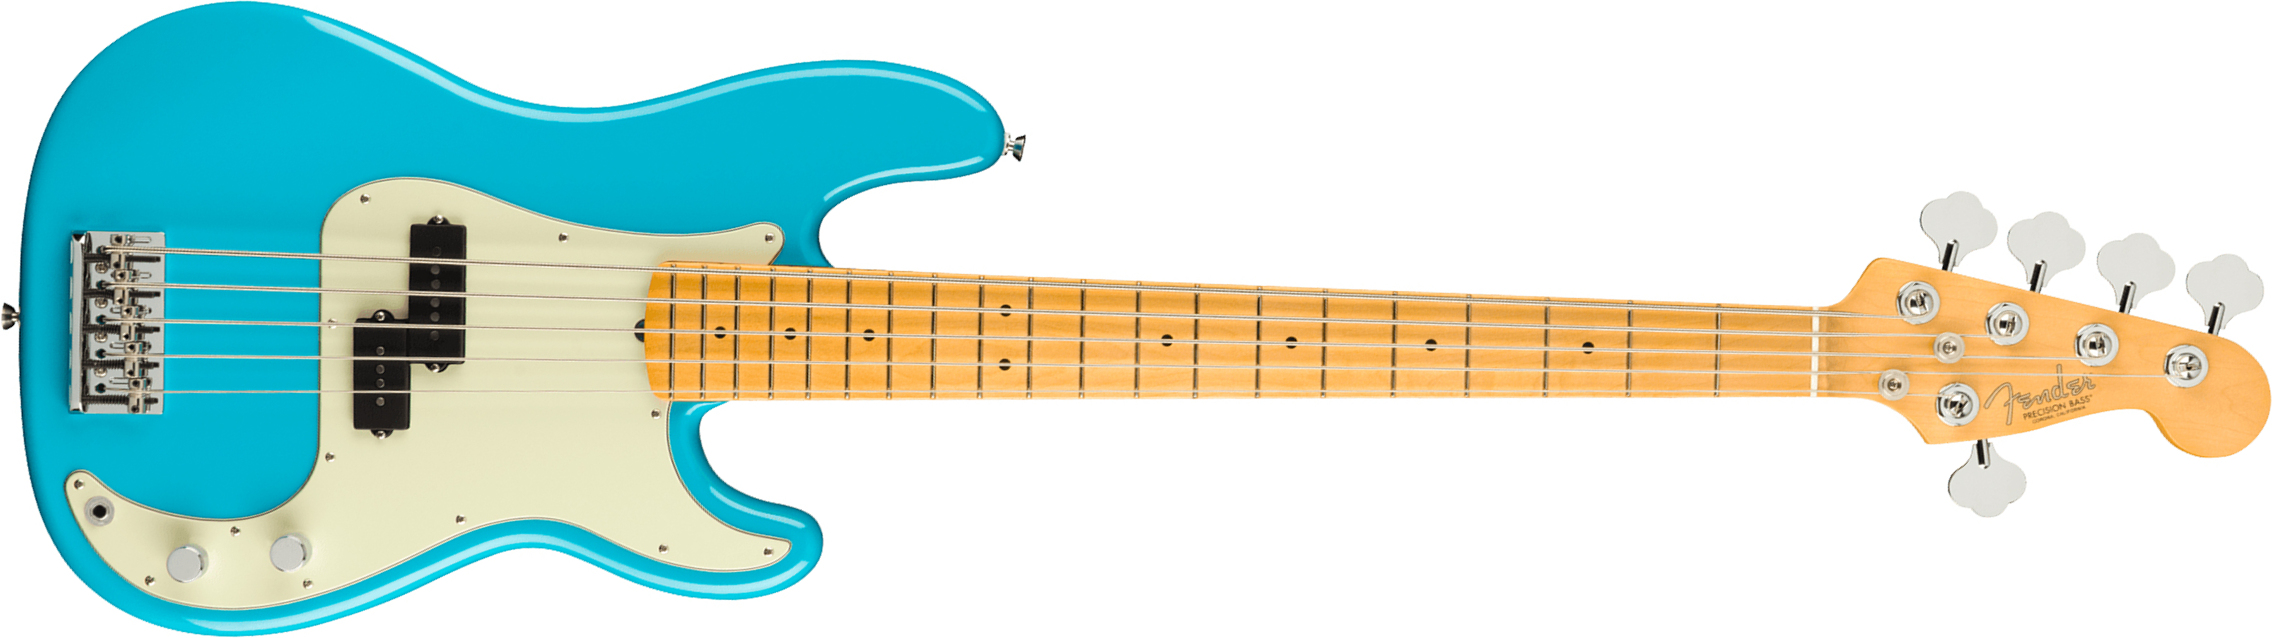 Fender Precision Bass V American Professional Ii Usa 5-cordes Mn - Miami Blue - Bajo eléctrico de cuerpo sólido - Main picture